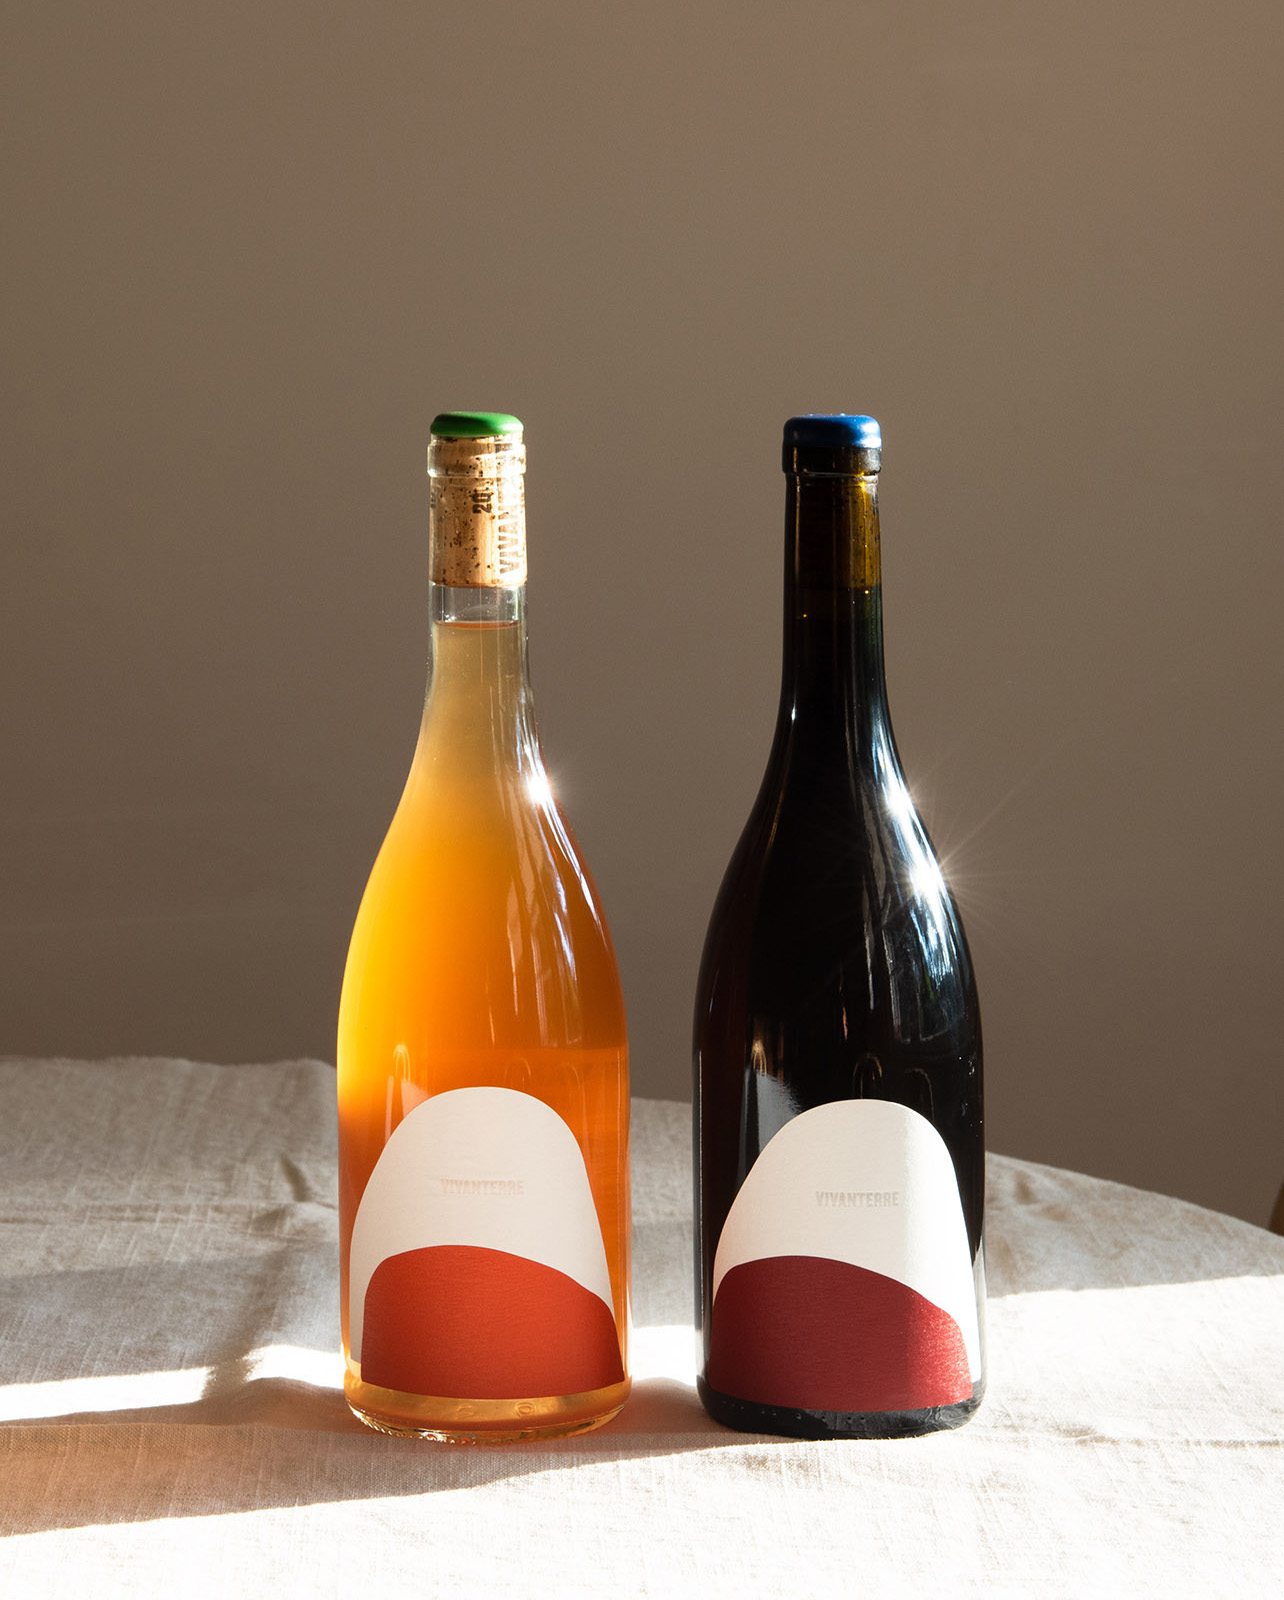 Vivianterre wine bottles